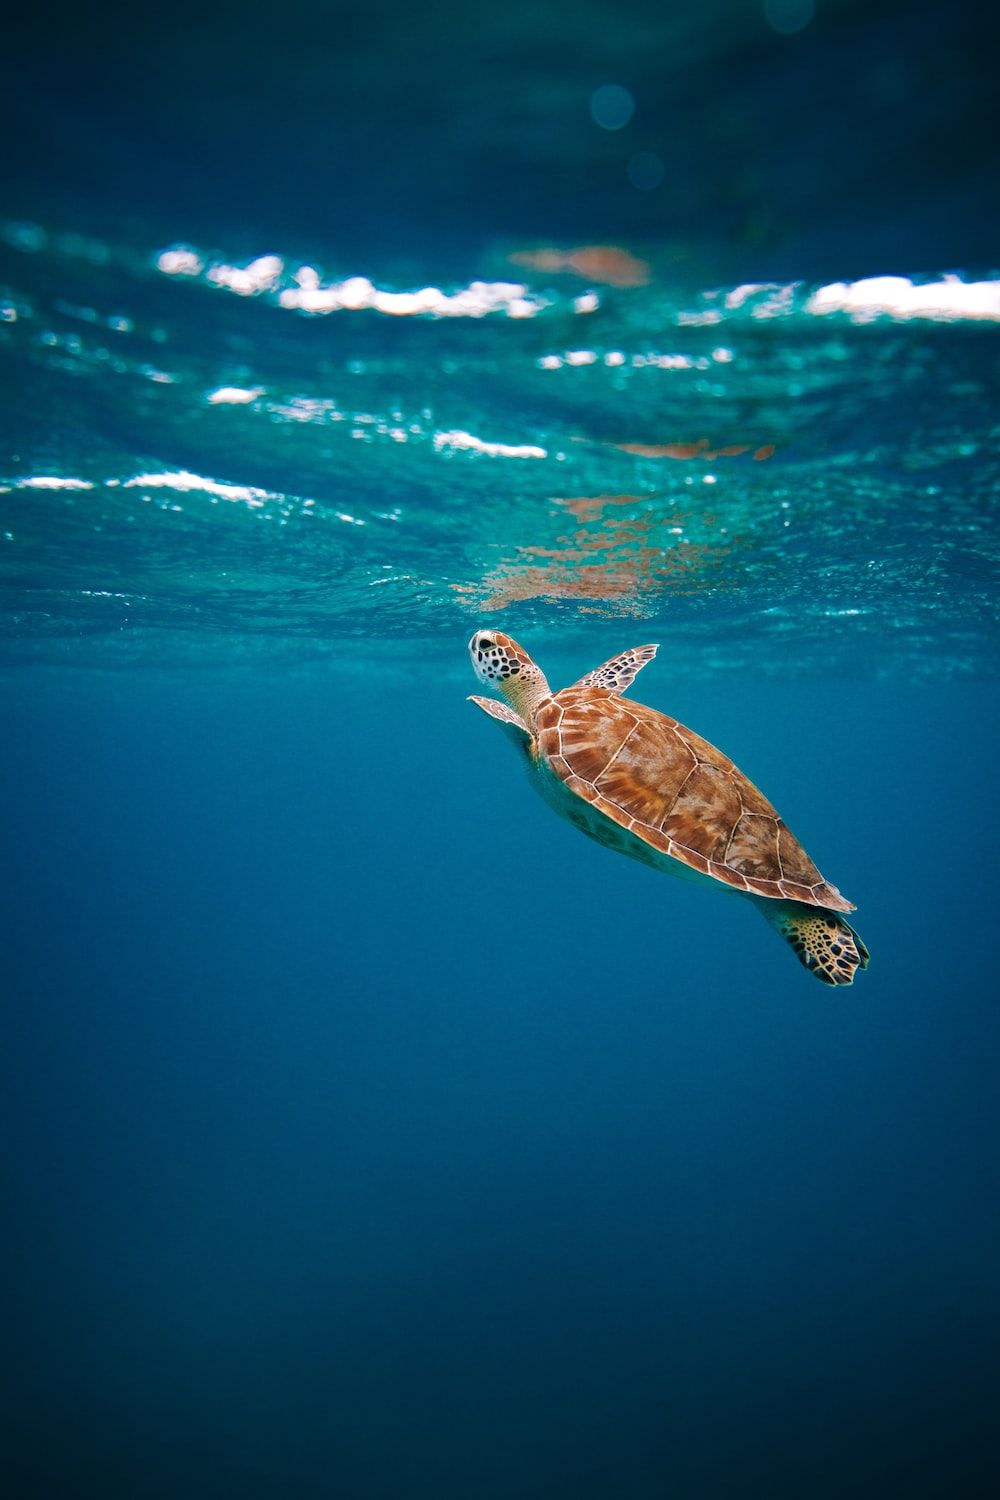 A turtle swimming in the ocean - Sea turtle, turtle, underwater